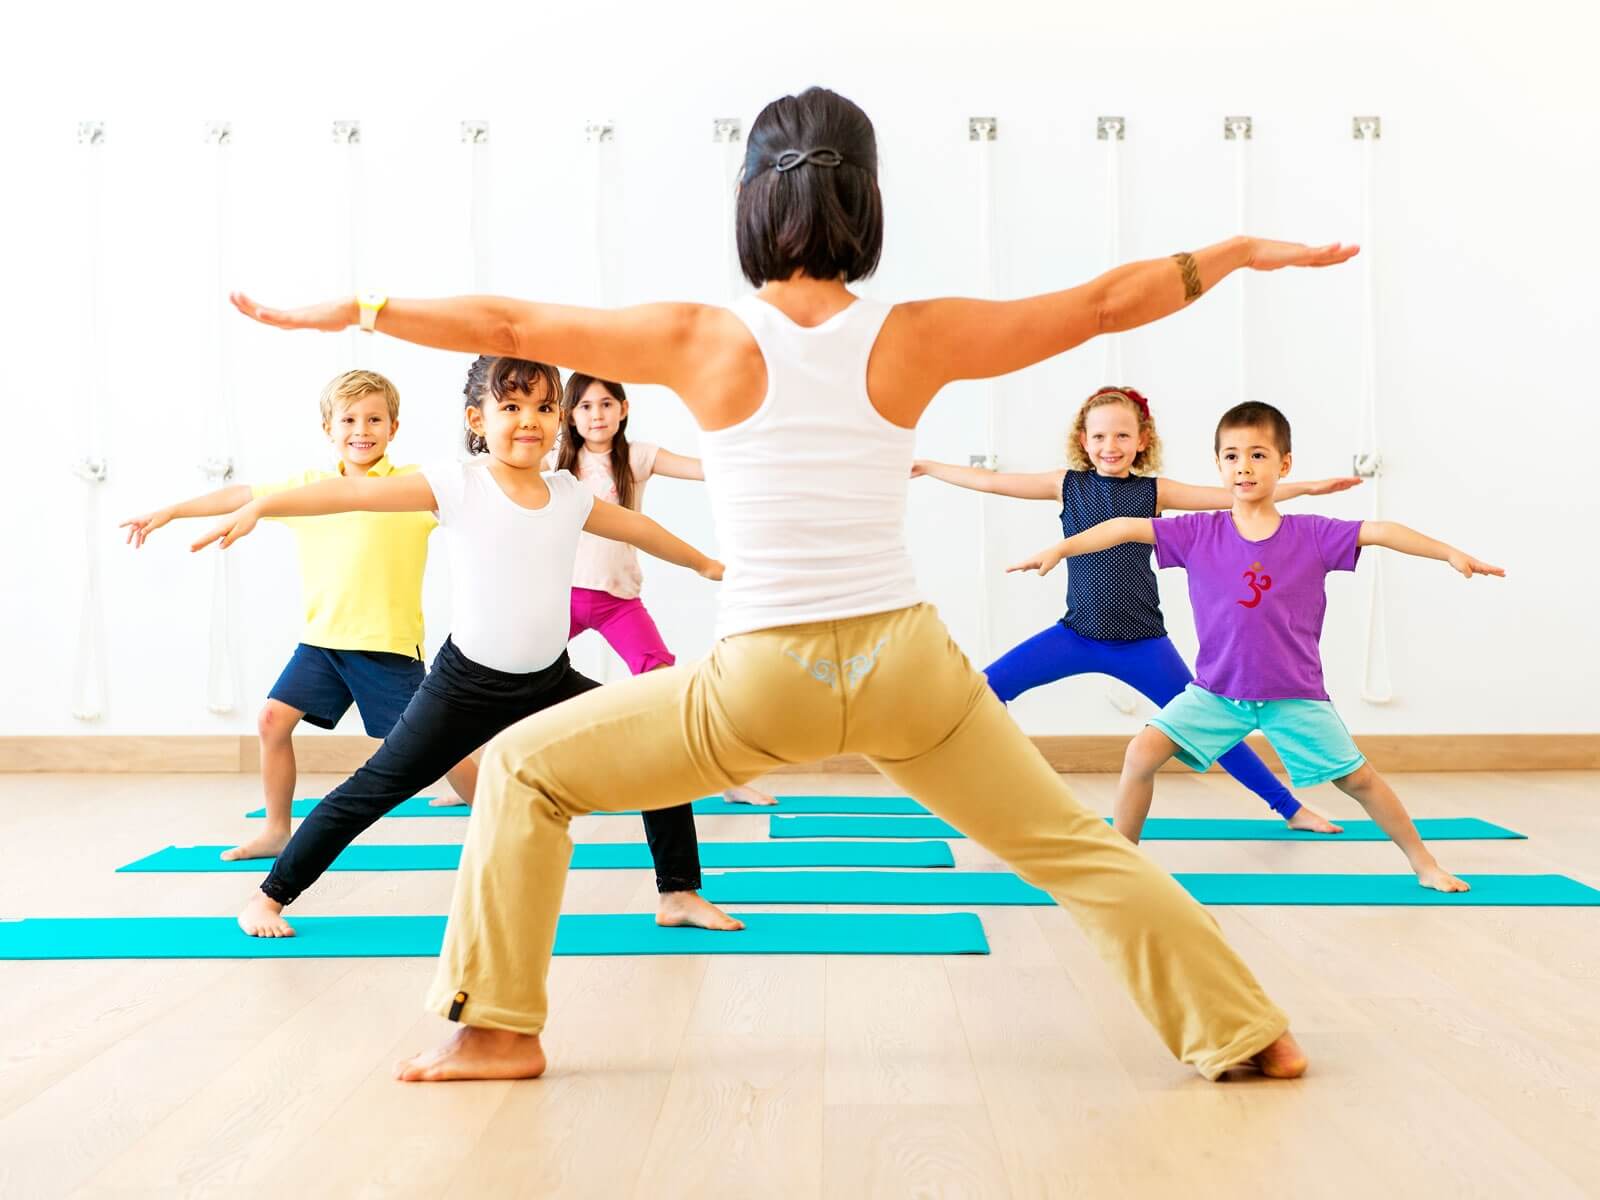 A yoga teacher teaching yoga to the kids